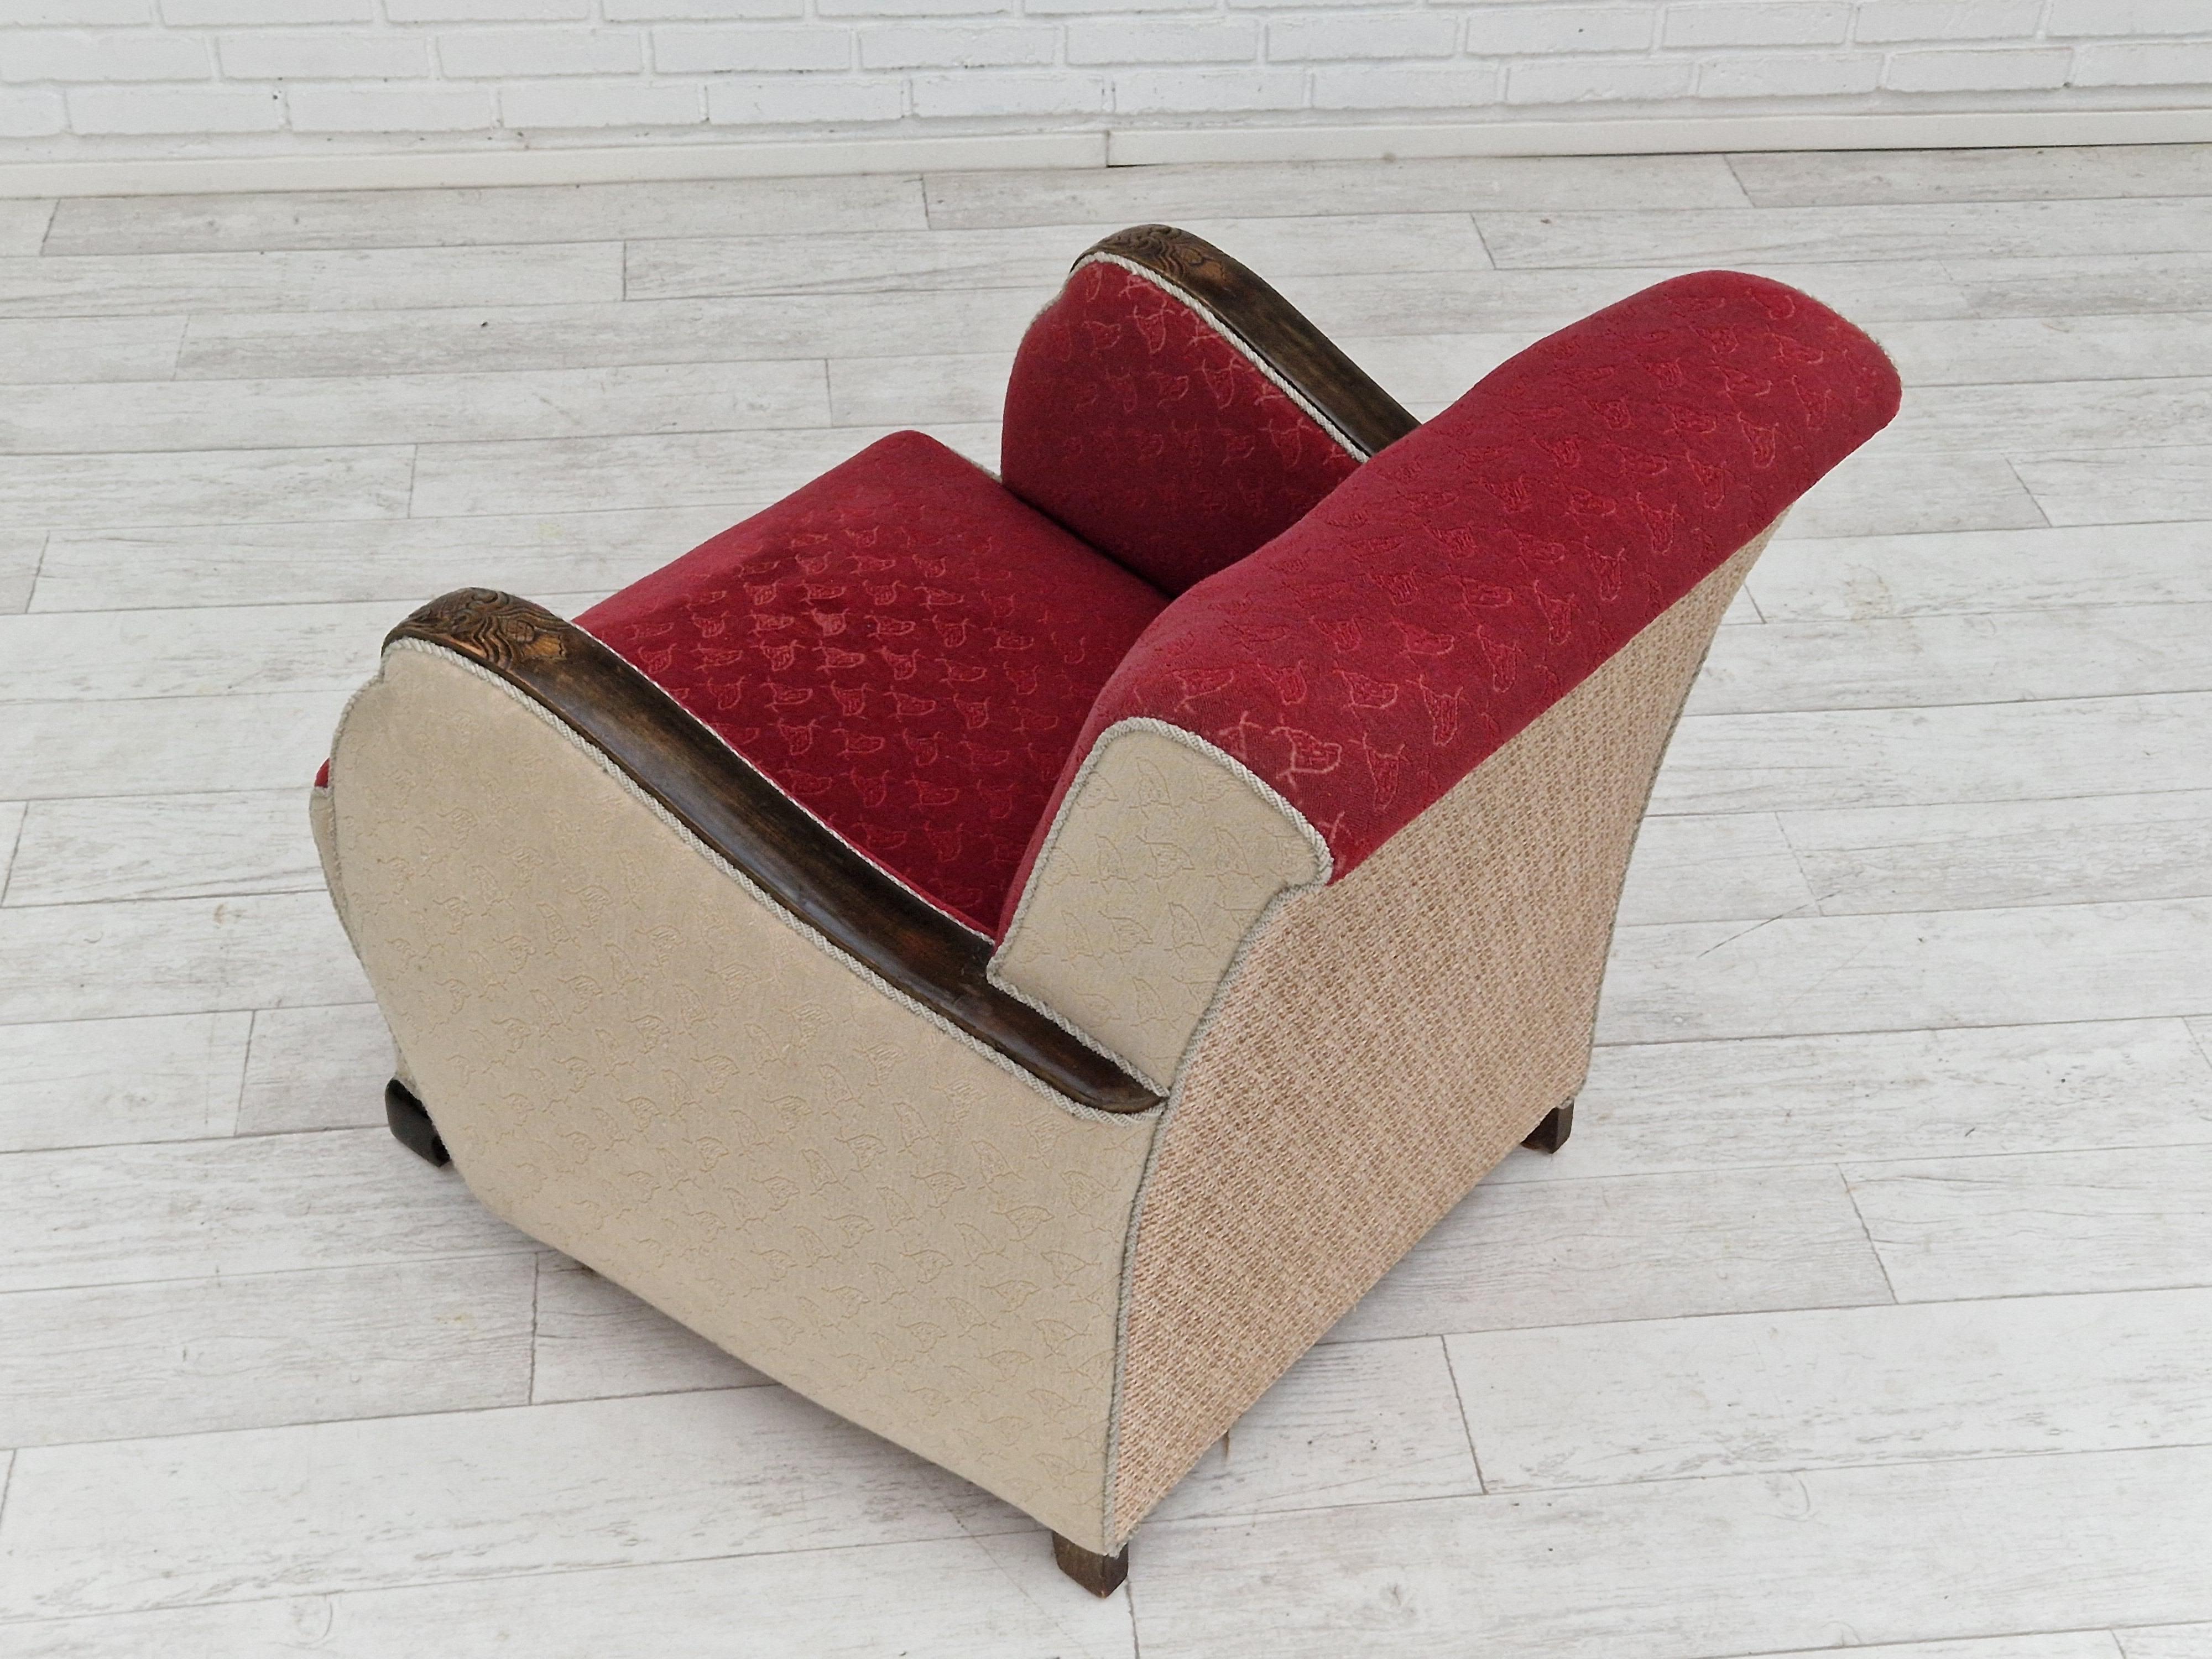 1950s, Scandinavian Art Deco Chairs, Original Condition For Sale 11